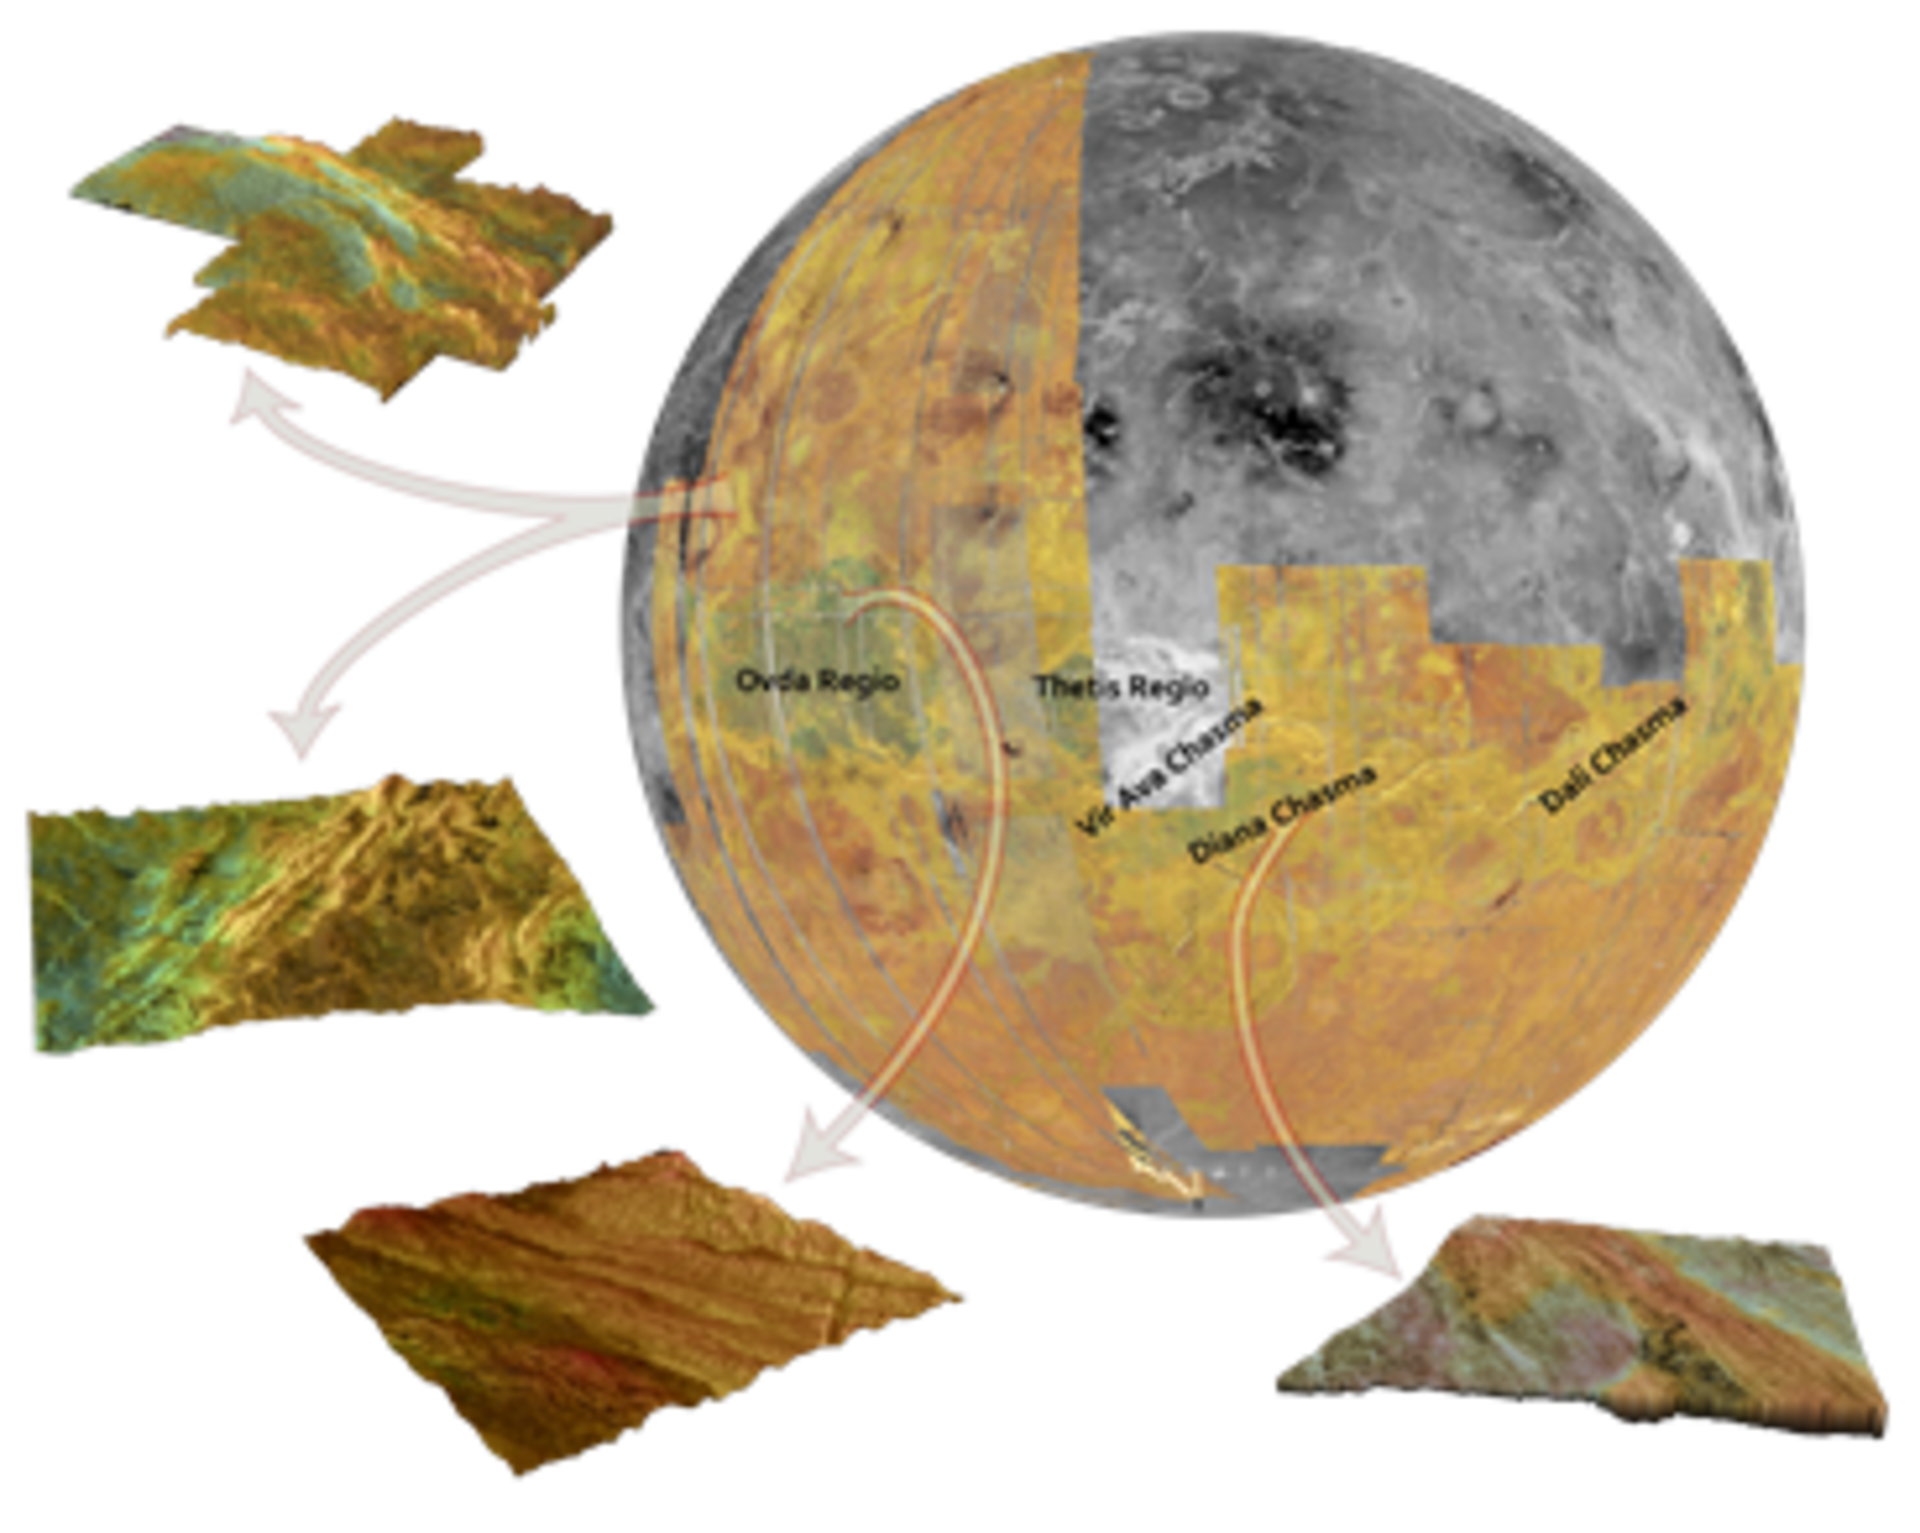 Radar observations of Venus